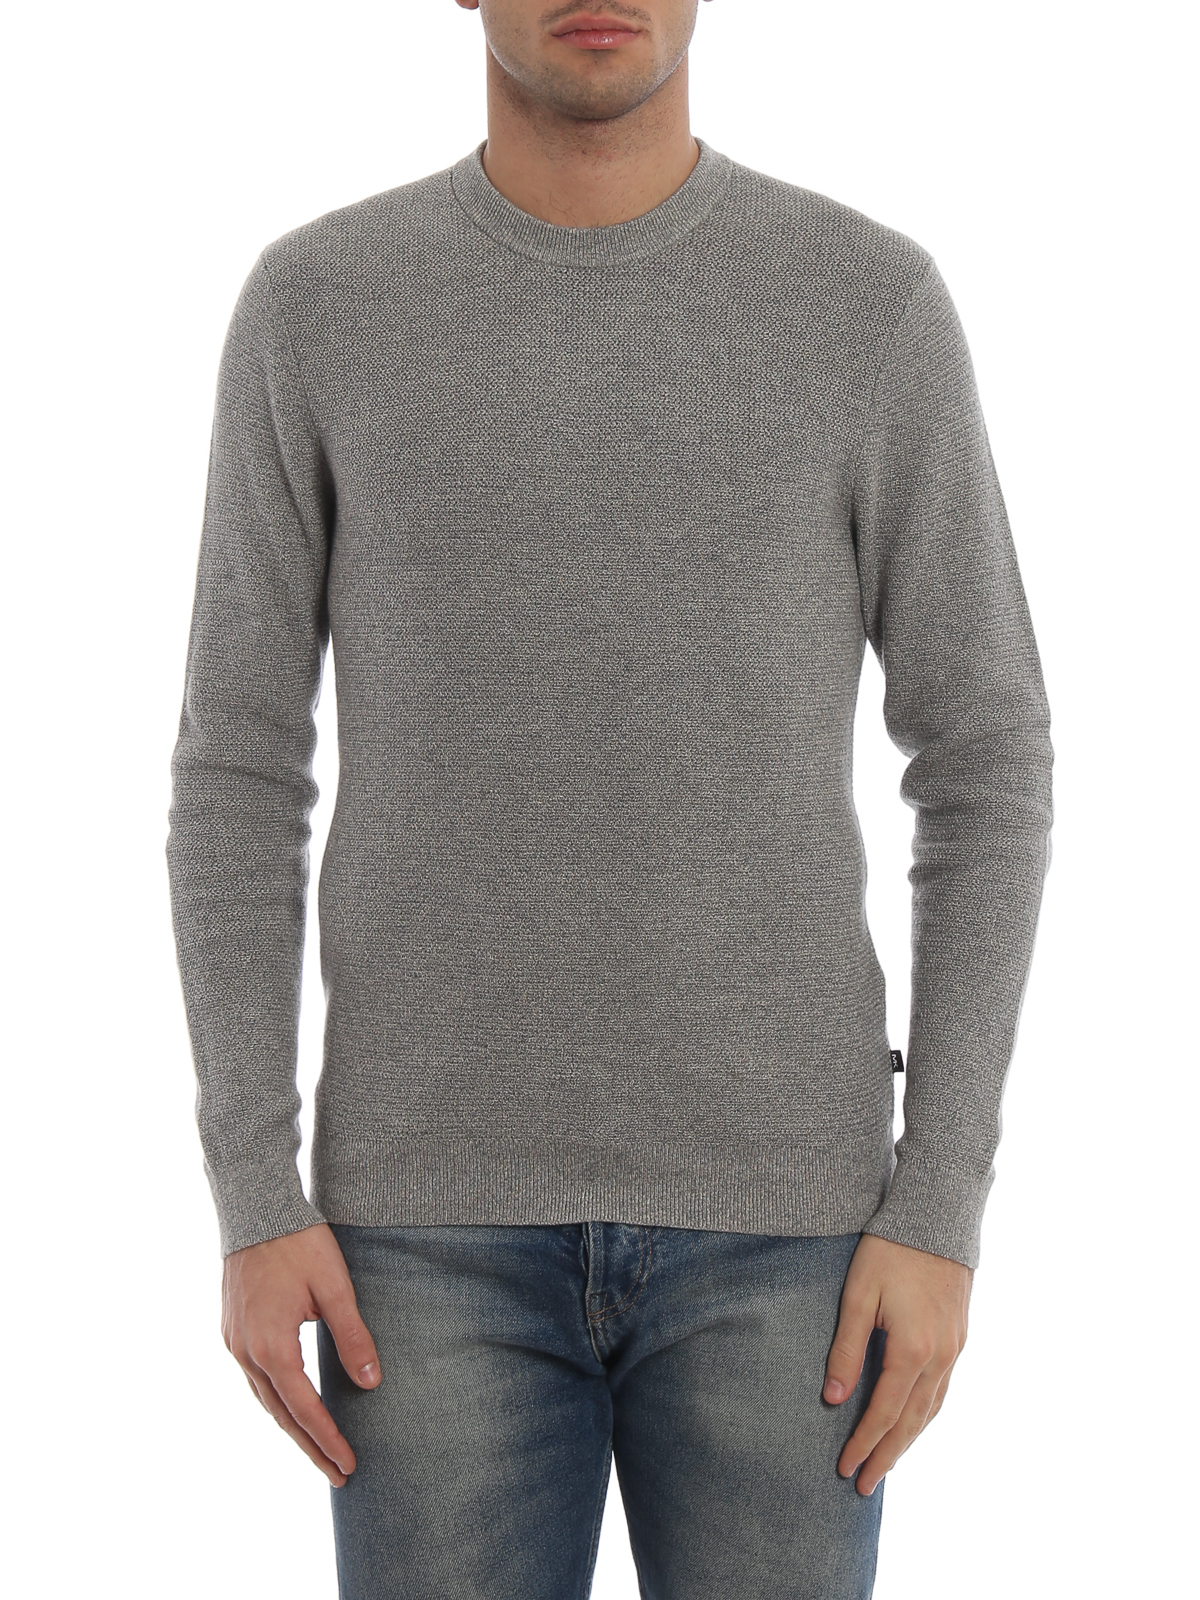 Shop Michael Kors Light Grey Soft Cotton And Wool Sweater